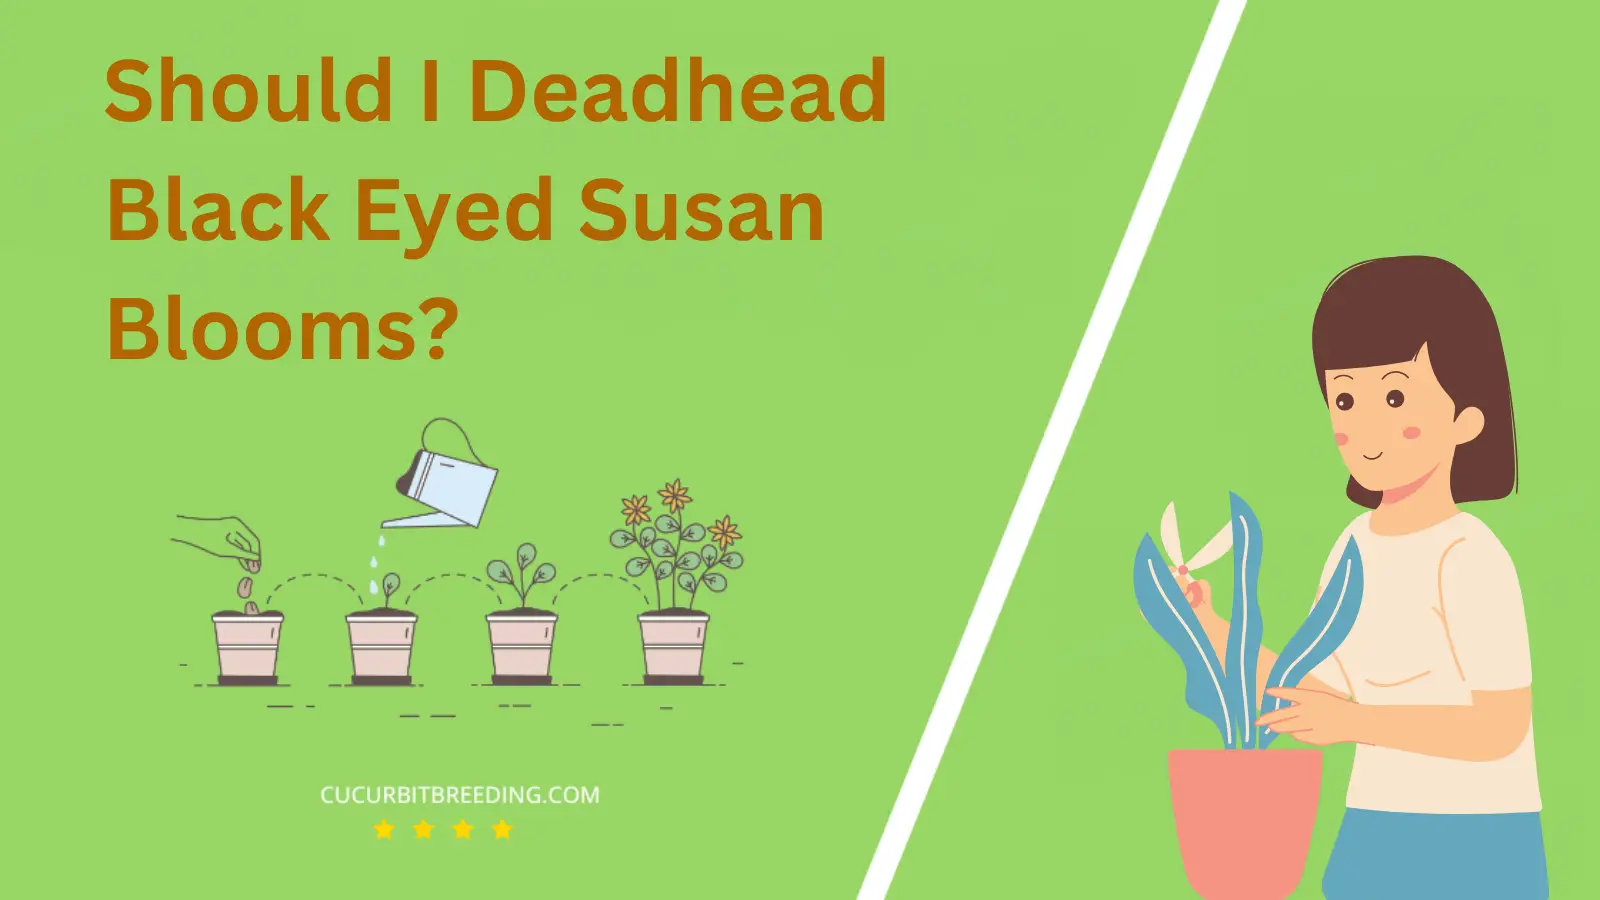 Should I Deadhead Black Eyed Susan Blooms?